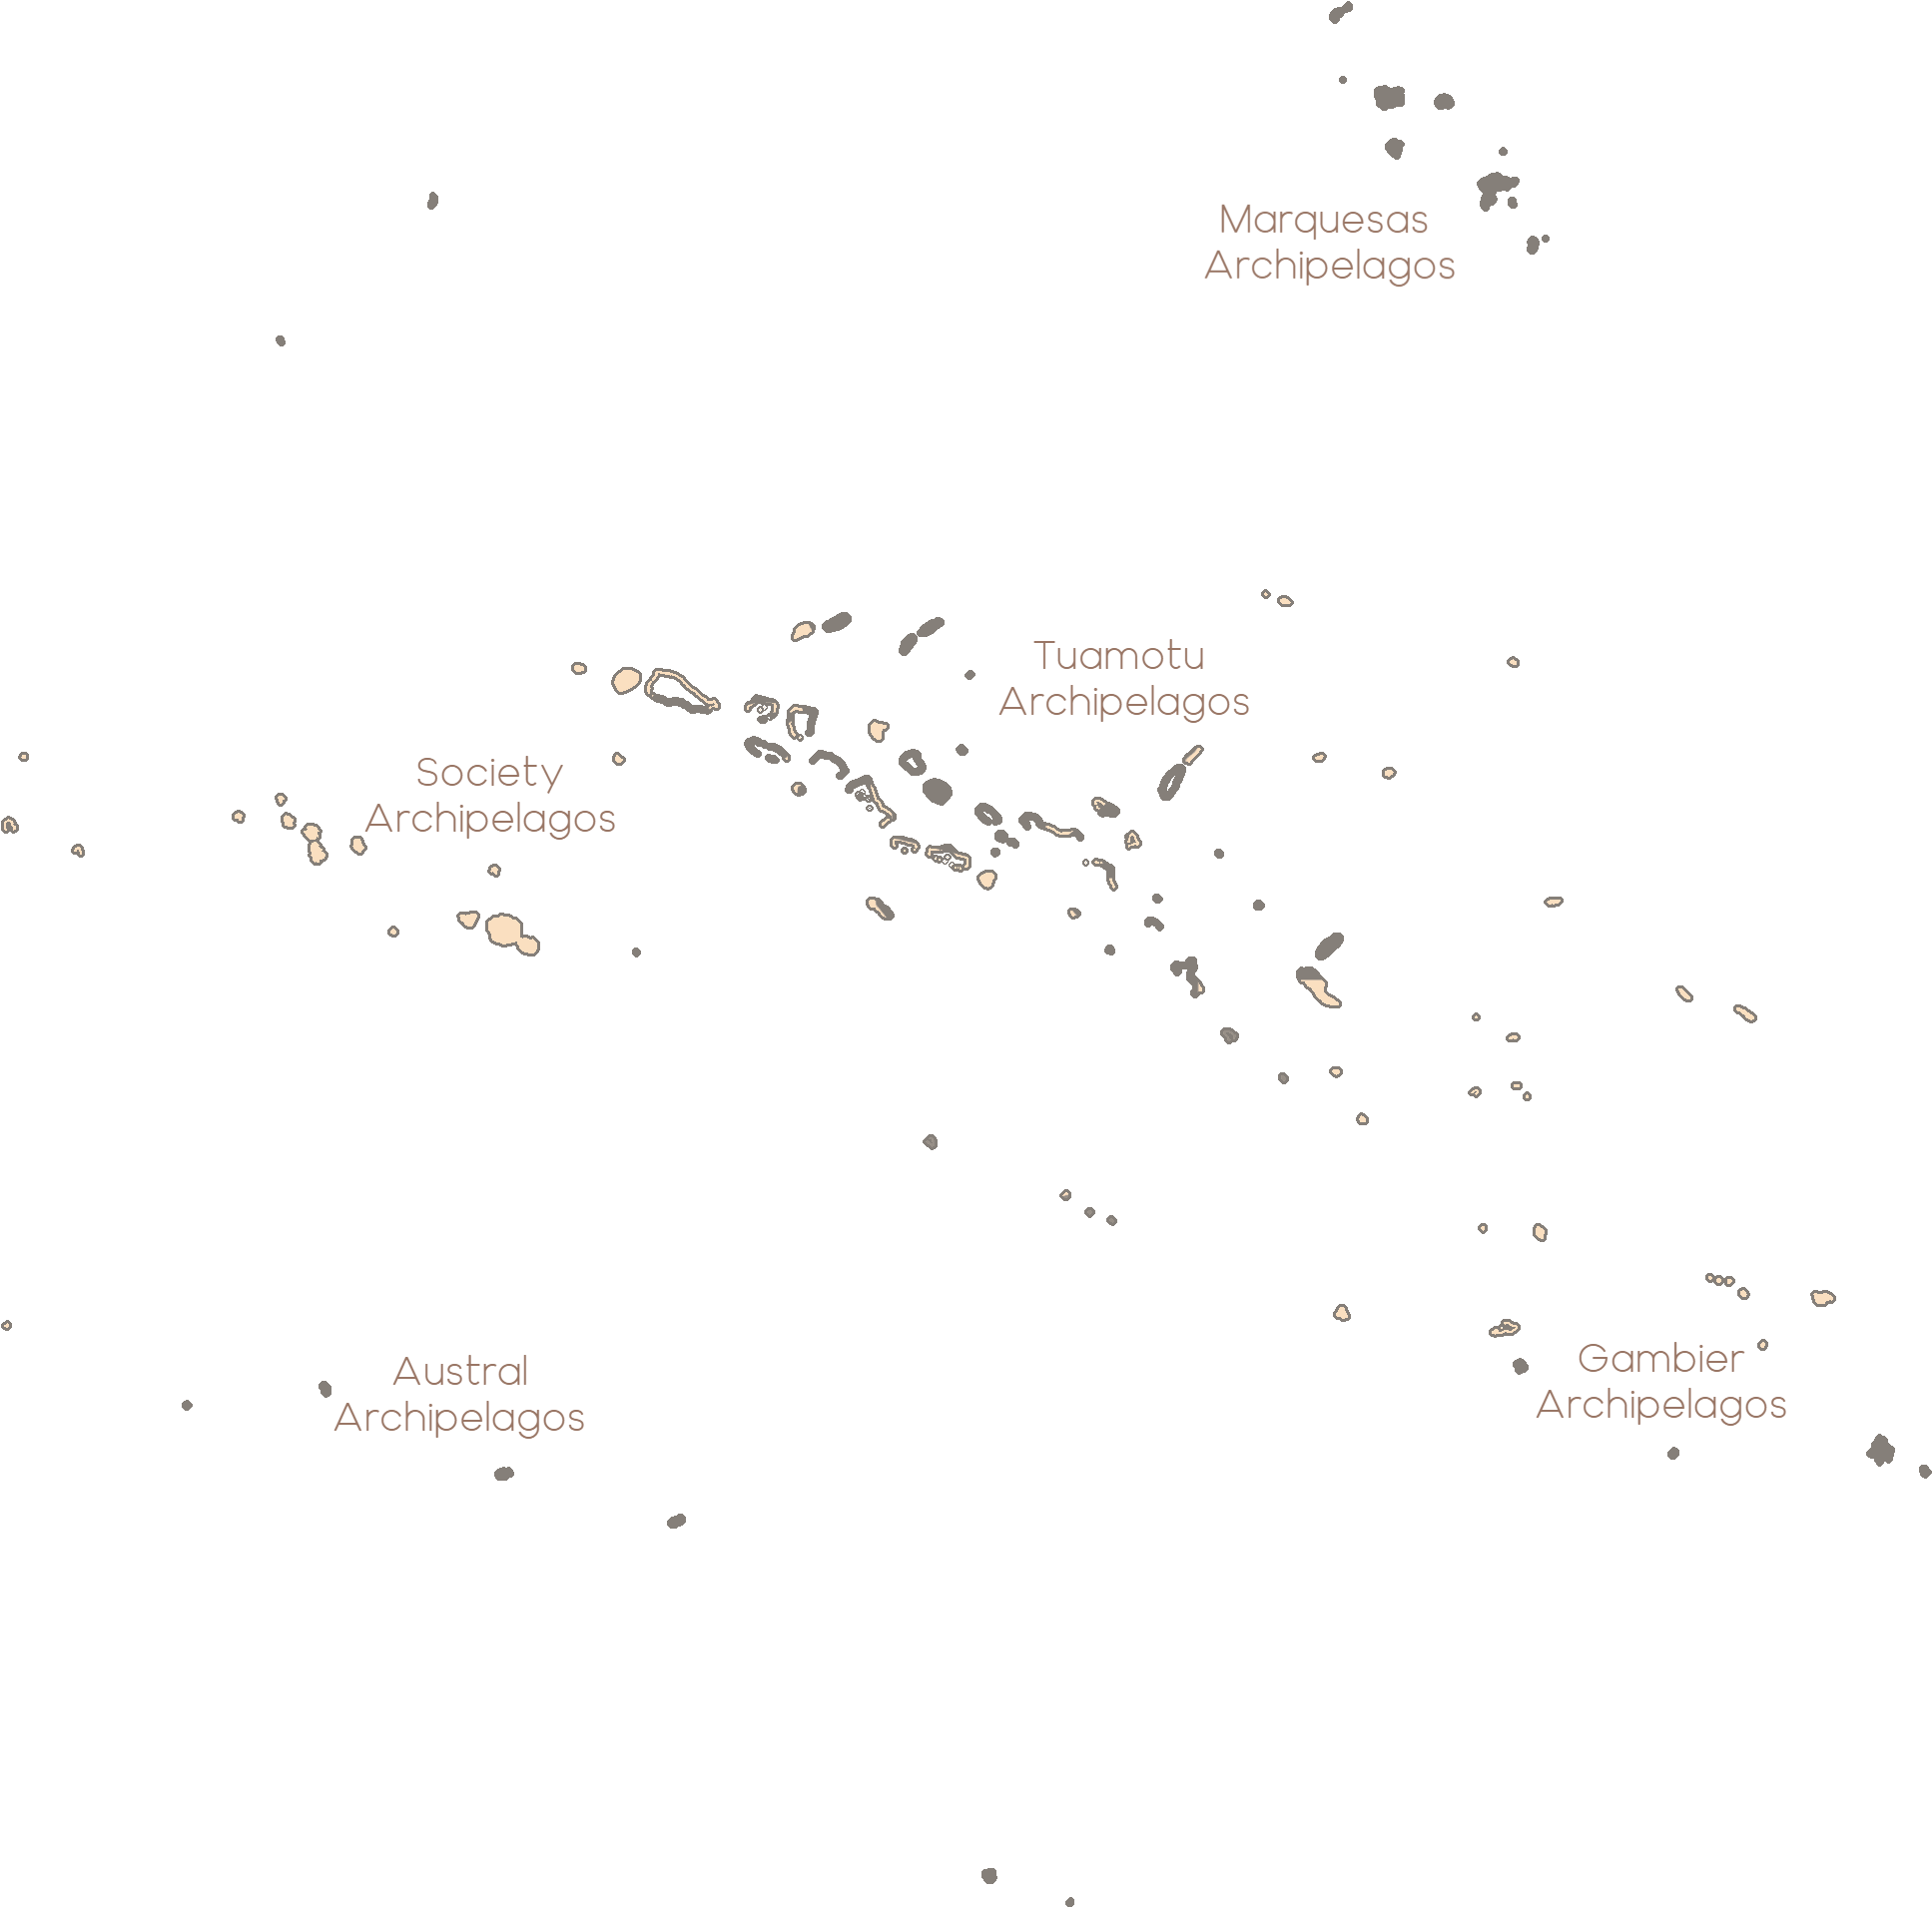 Archipelagos of French Polynesia